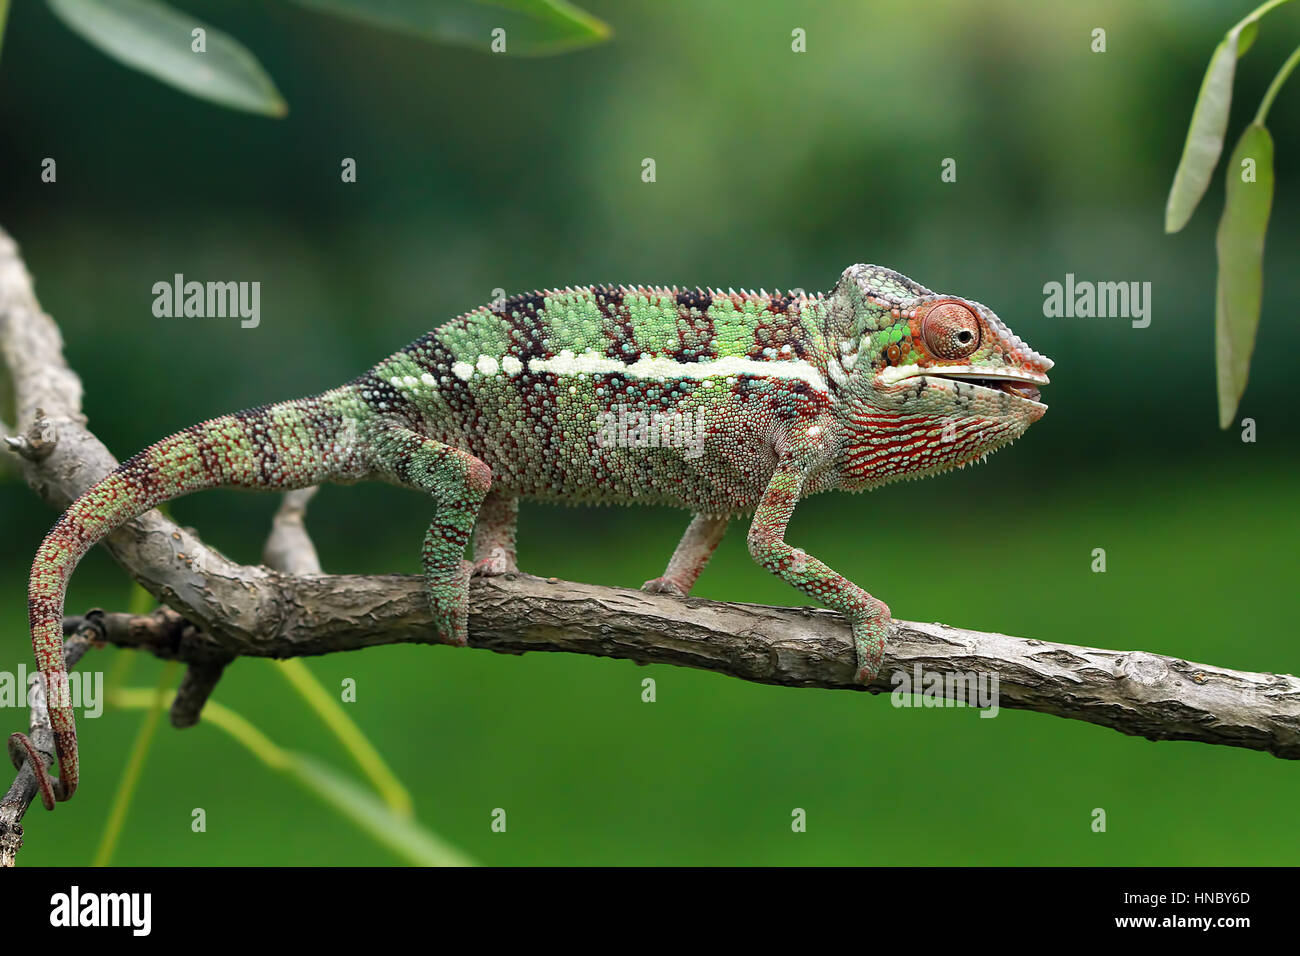 Chameleon walking on branch, Indonesia Stock Photo